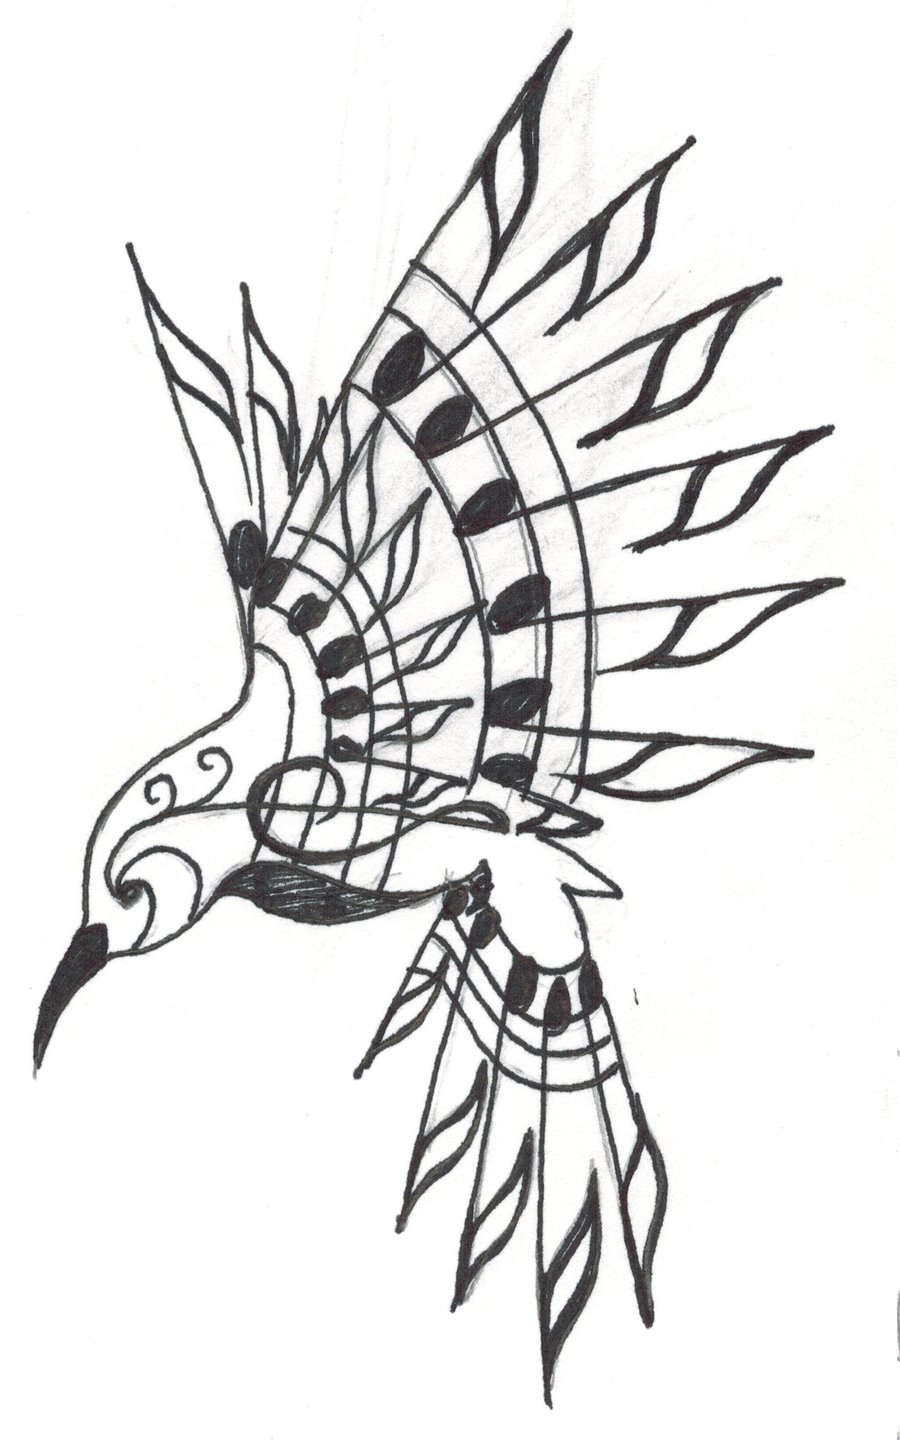 Hummingbird Drawings - ClipArt Best